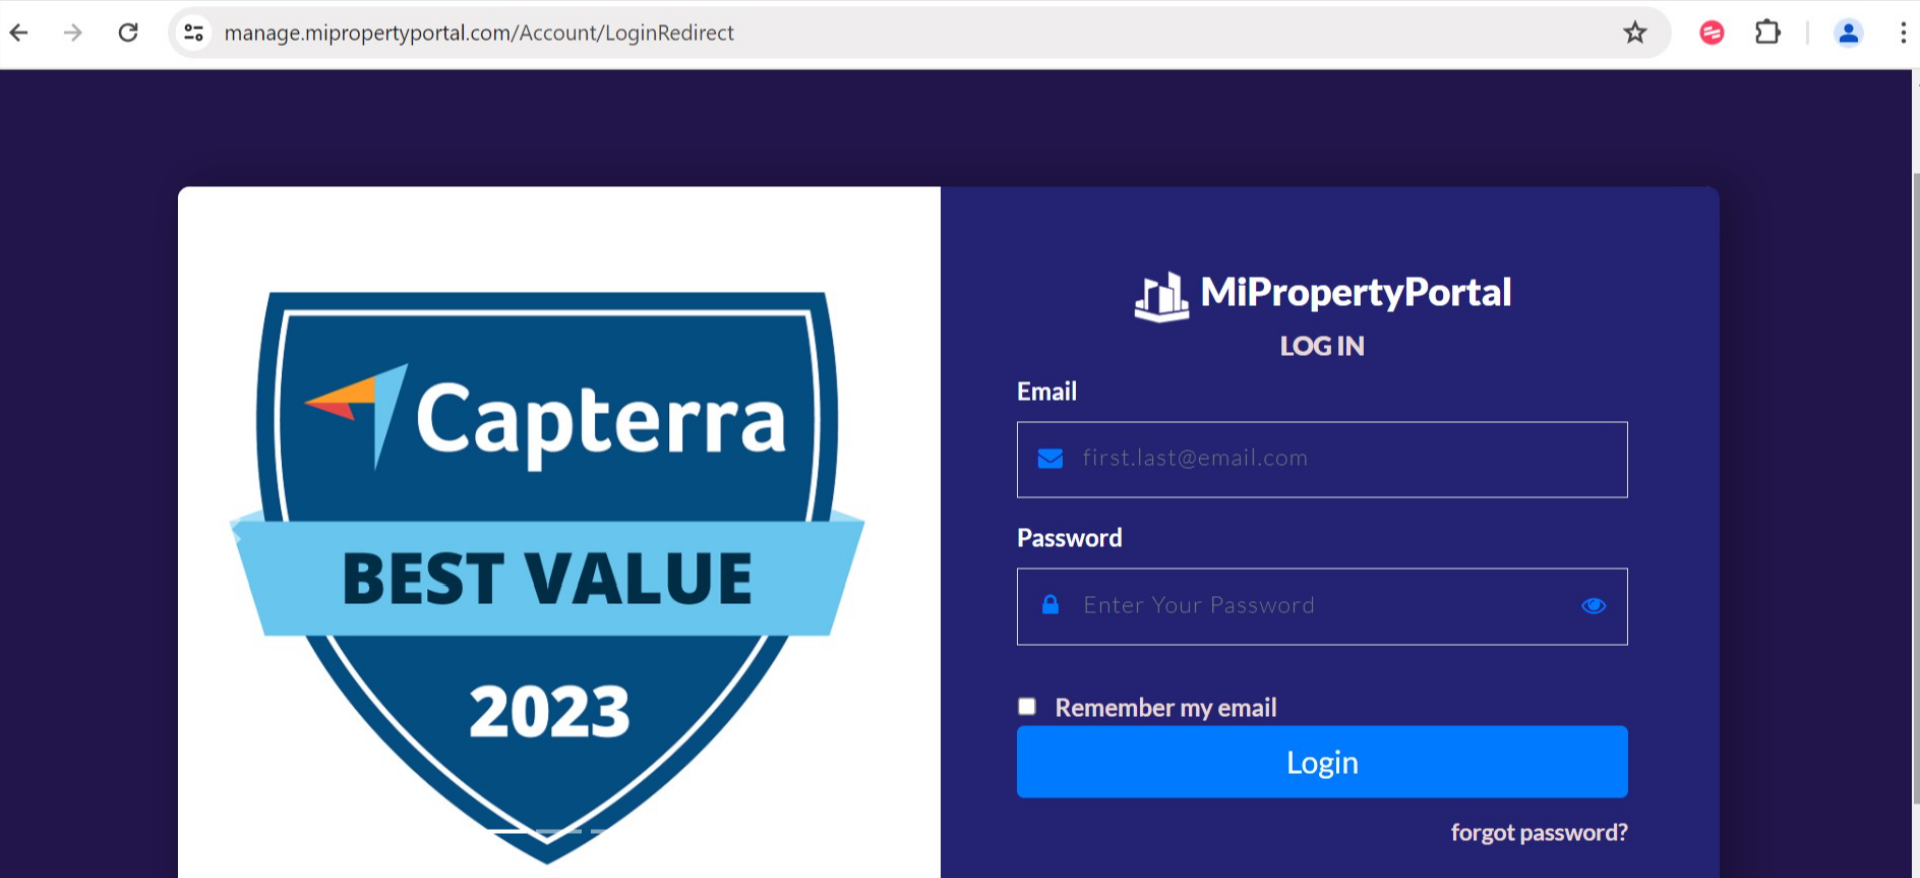 Login to the admin portal. Go to manage.mipropertyportal.com